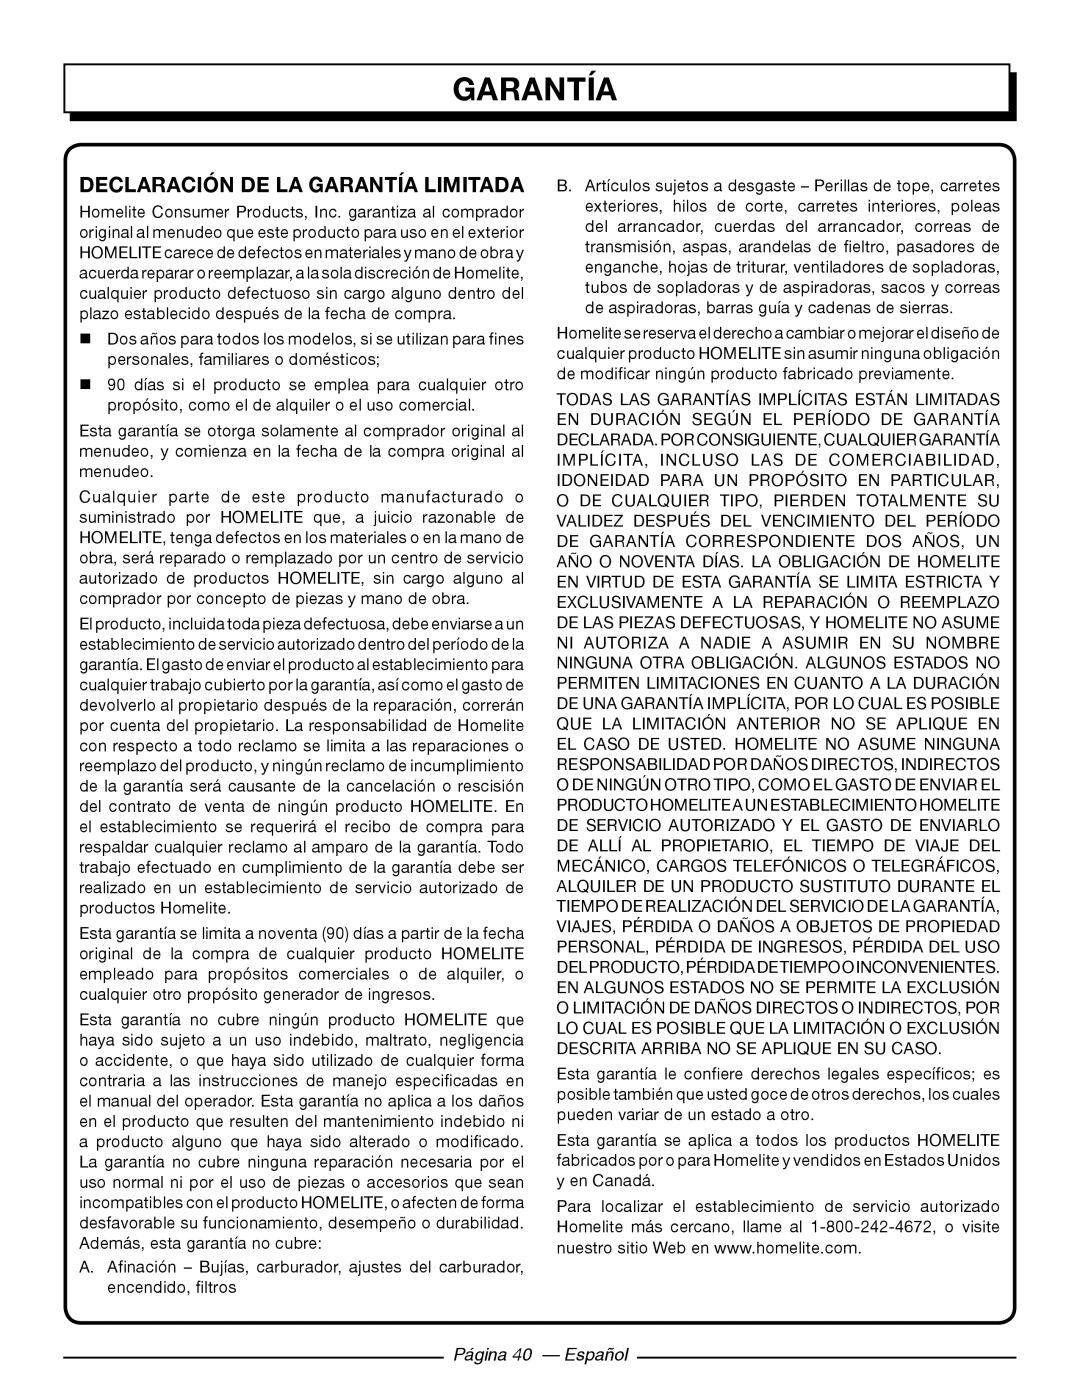 Homelite UT10546, UT10586, UT10584, UT10564, UT10544, UT10566 Declaración De La Garantía Limitada, Página 40 - Español 